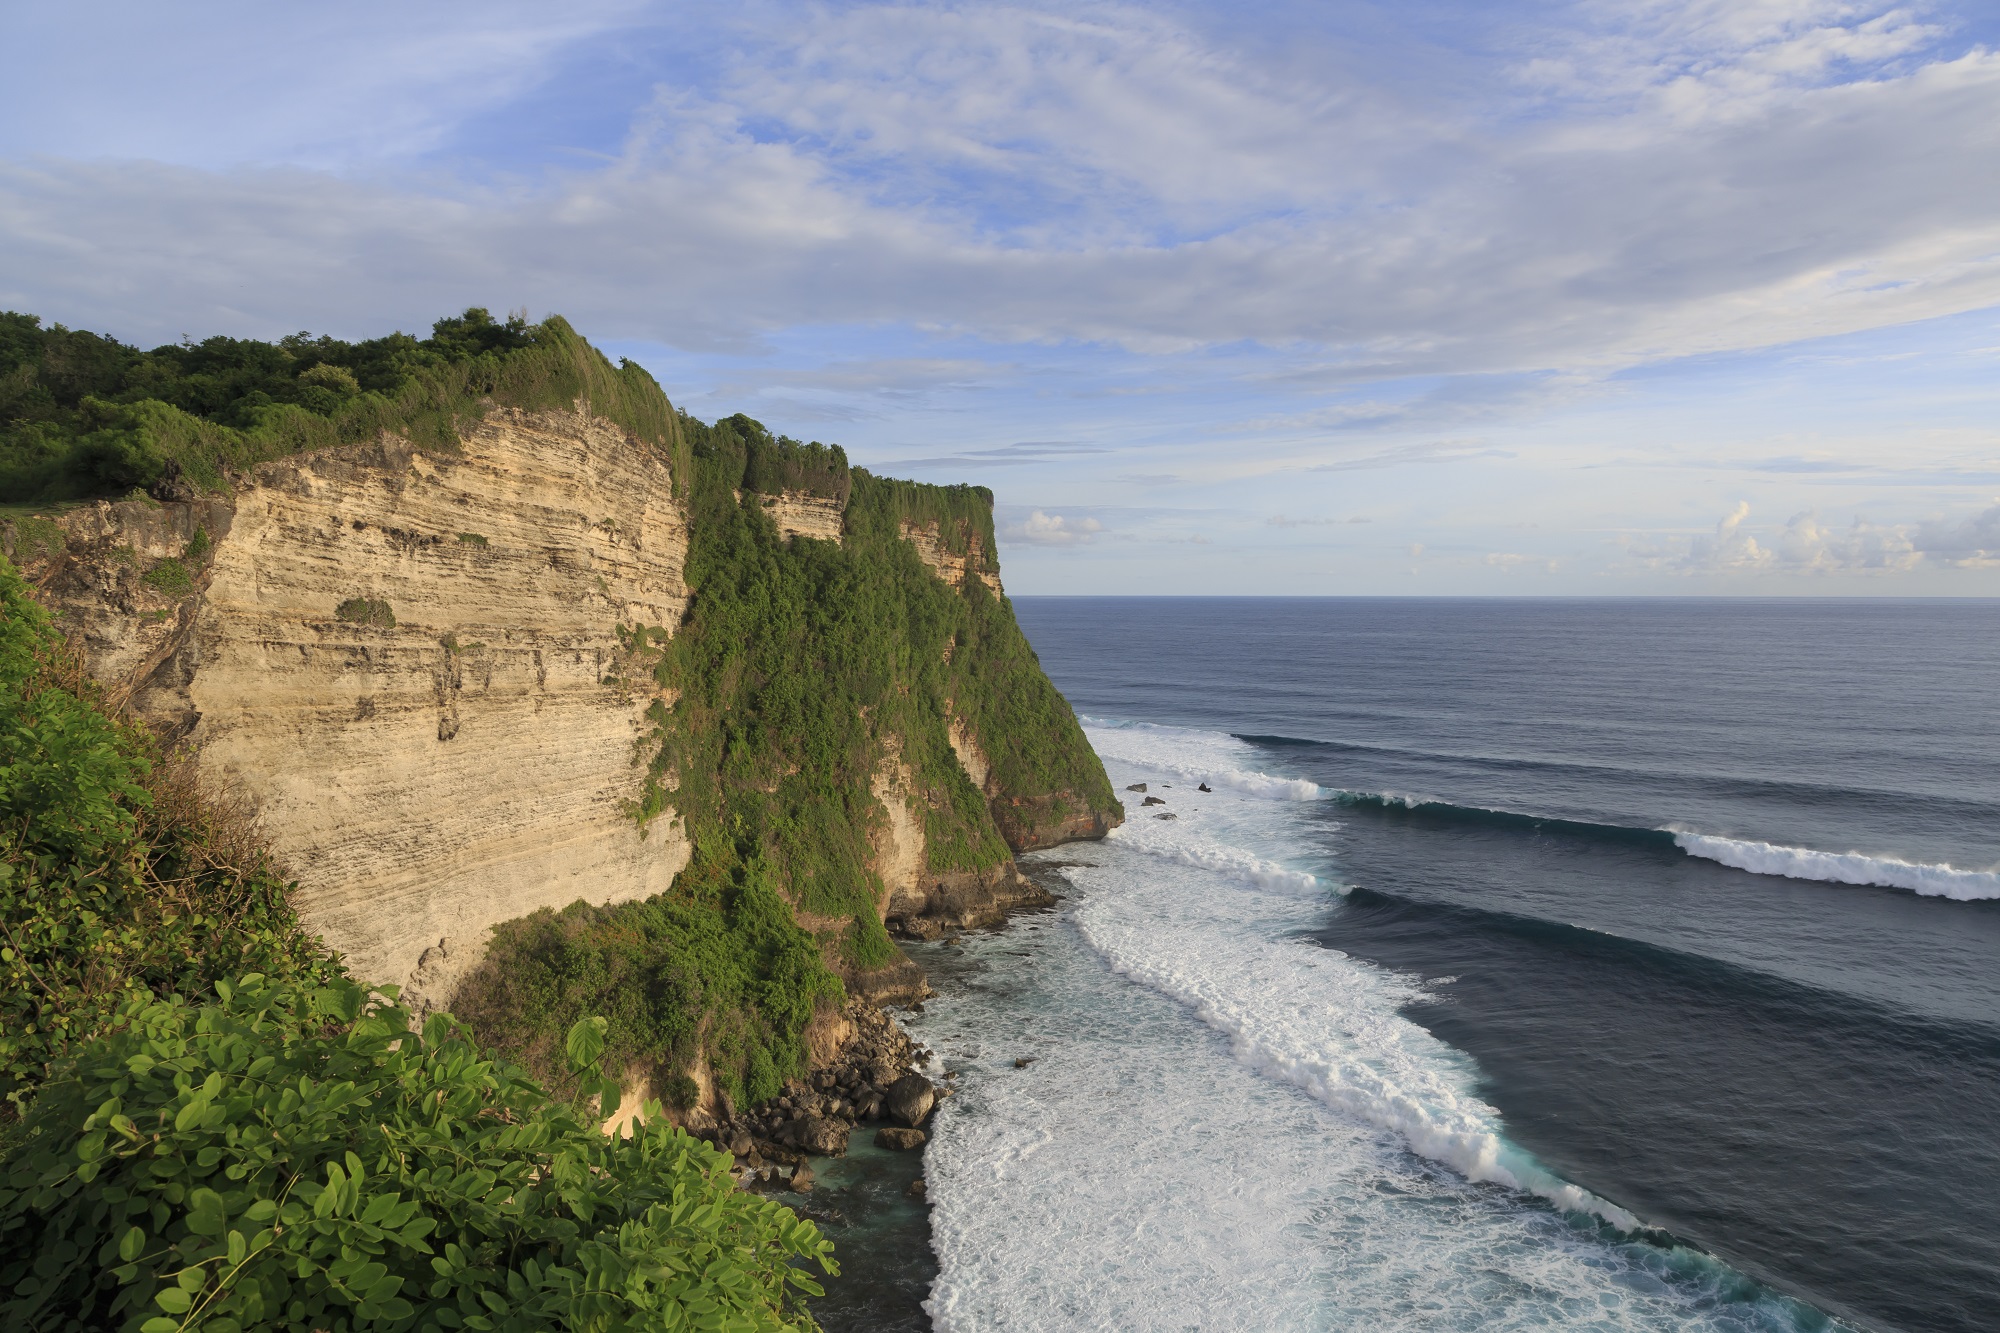 3 Days 2 Nights Bali Package at 4-star Hotels. Tour to Uluwatu, Lake Bratan & Tanah Lot